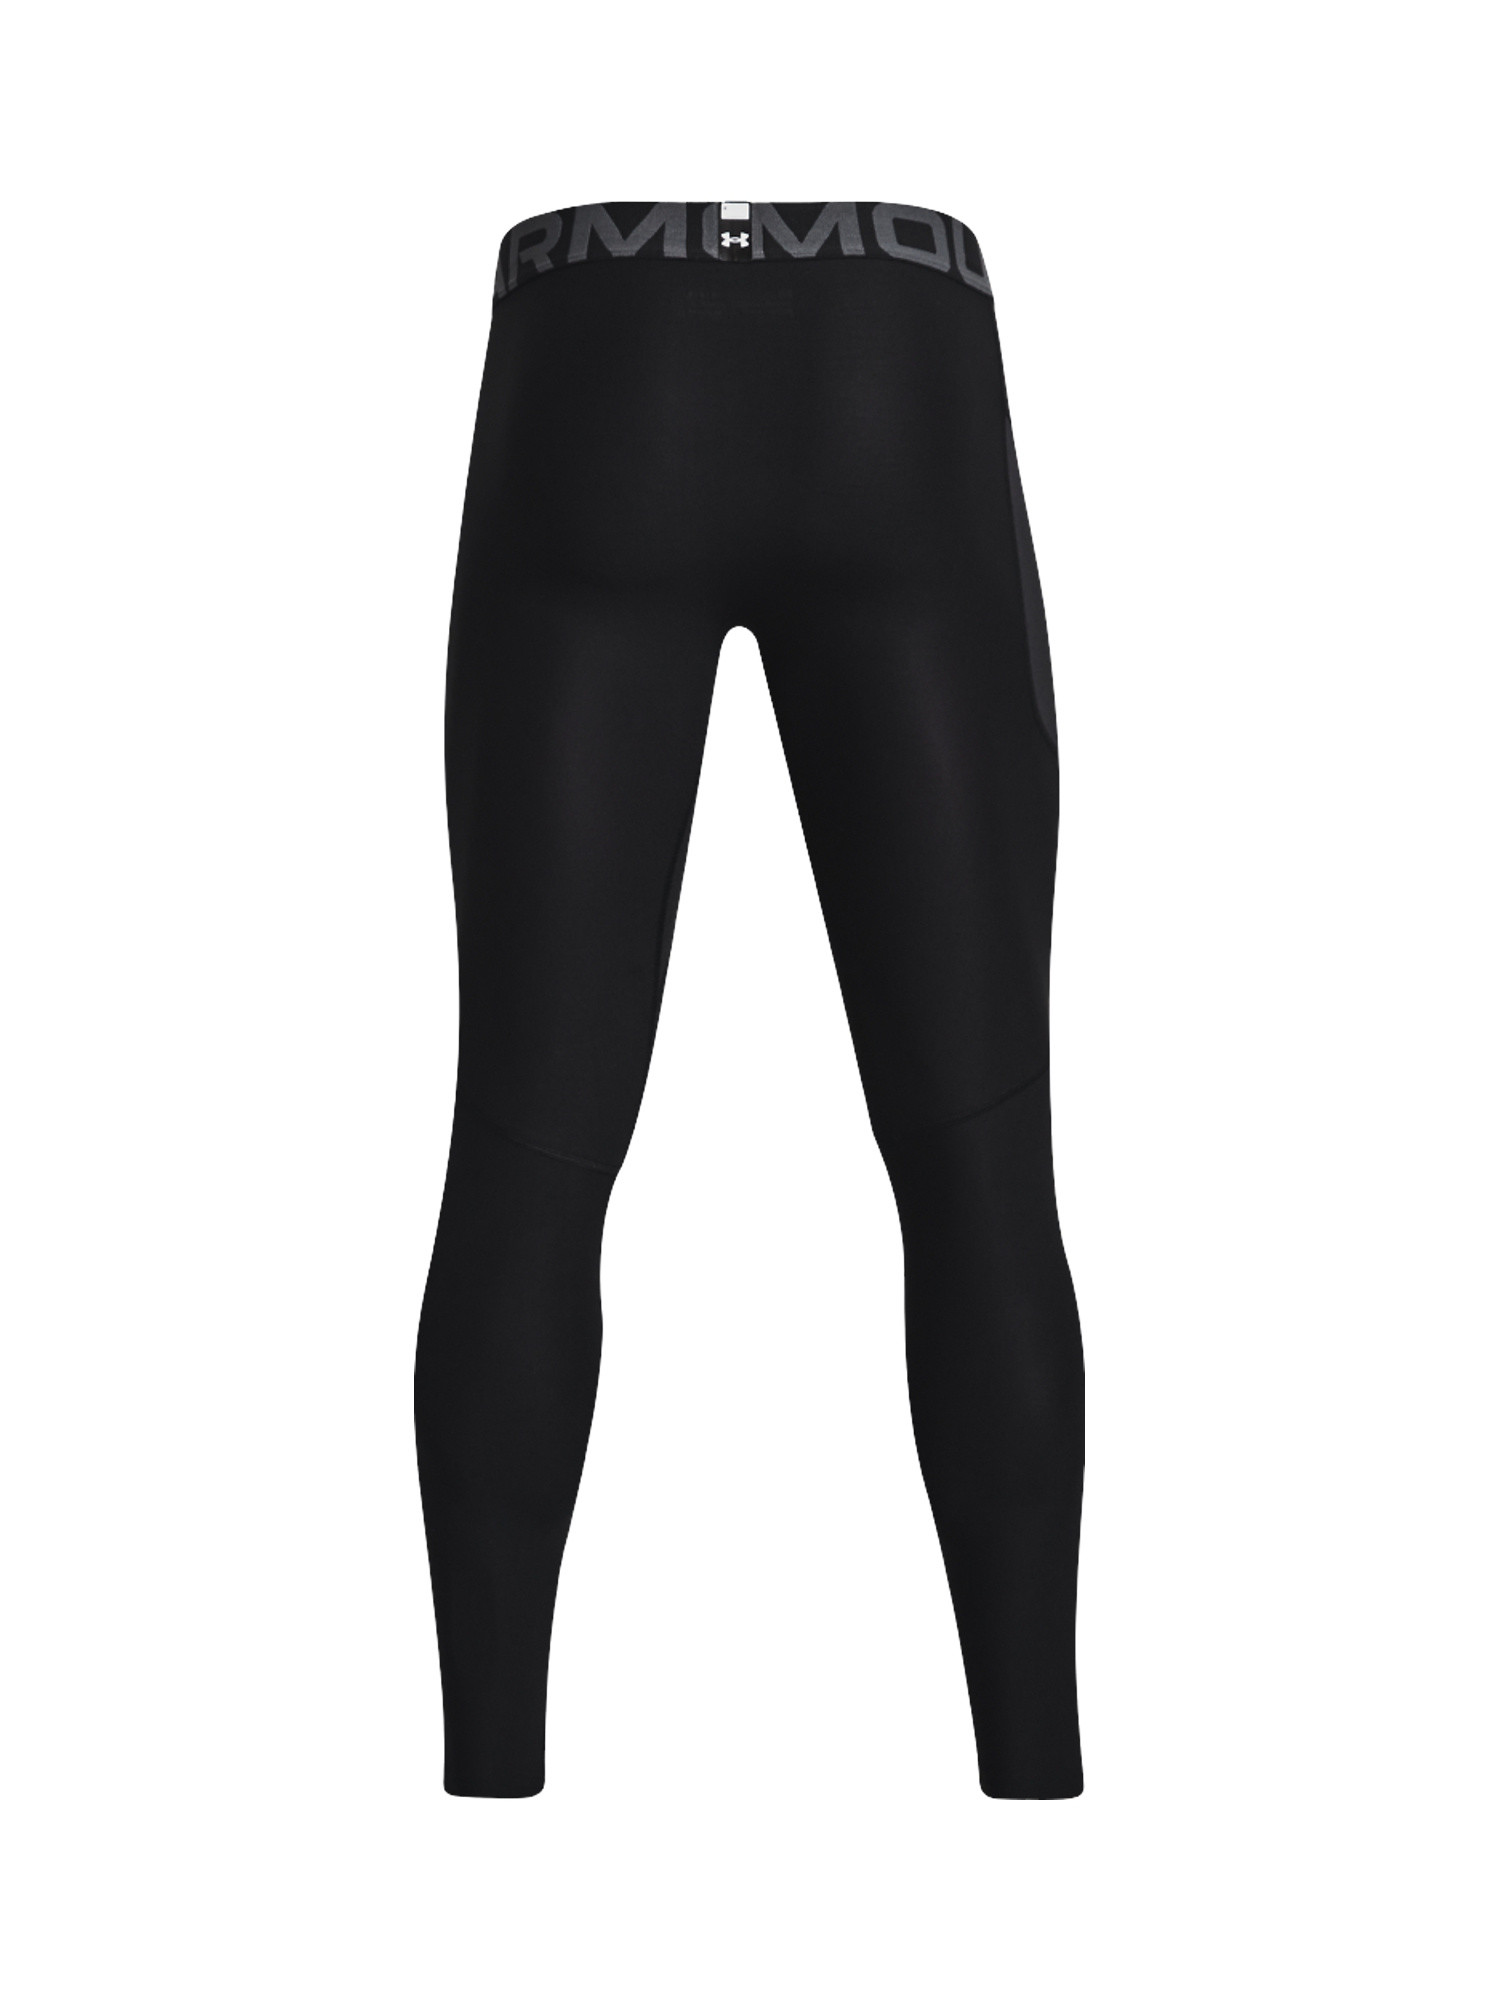 Under Armour - HeatGear® leggings, Black, large image number 1